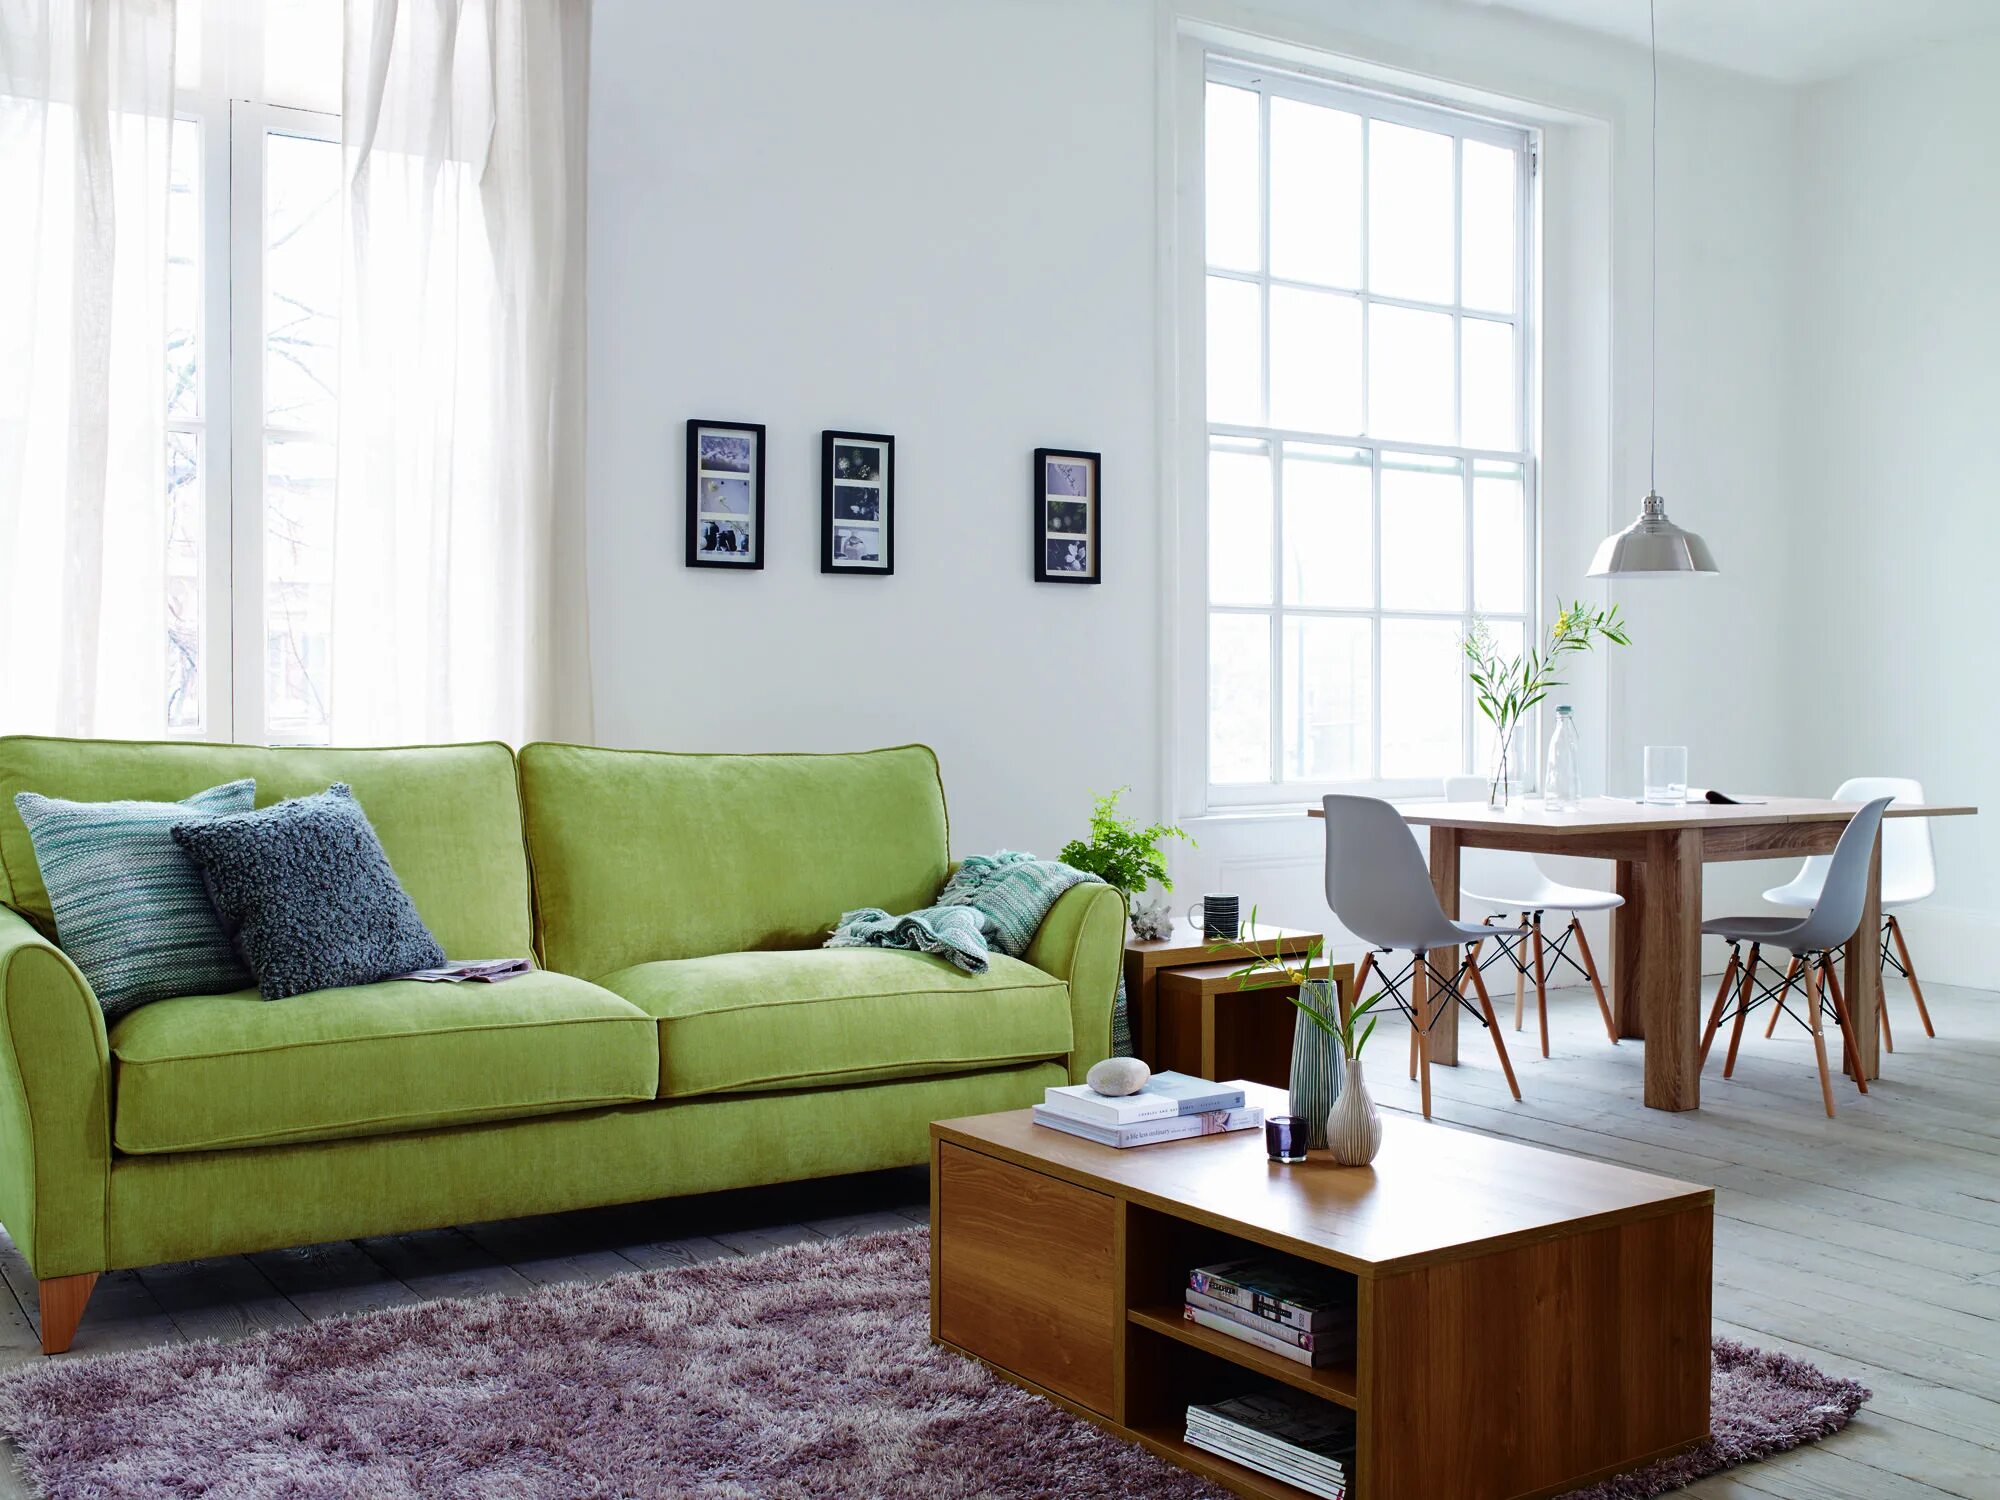 Next to the sofa. Зеленый диван сбоку. Диван светло зеленый. Зеленый диван в интерьере. Салатовый диван.